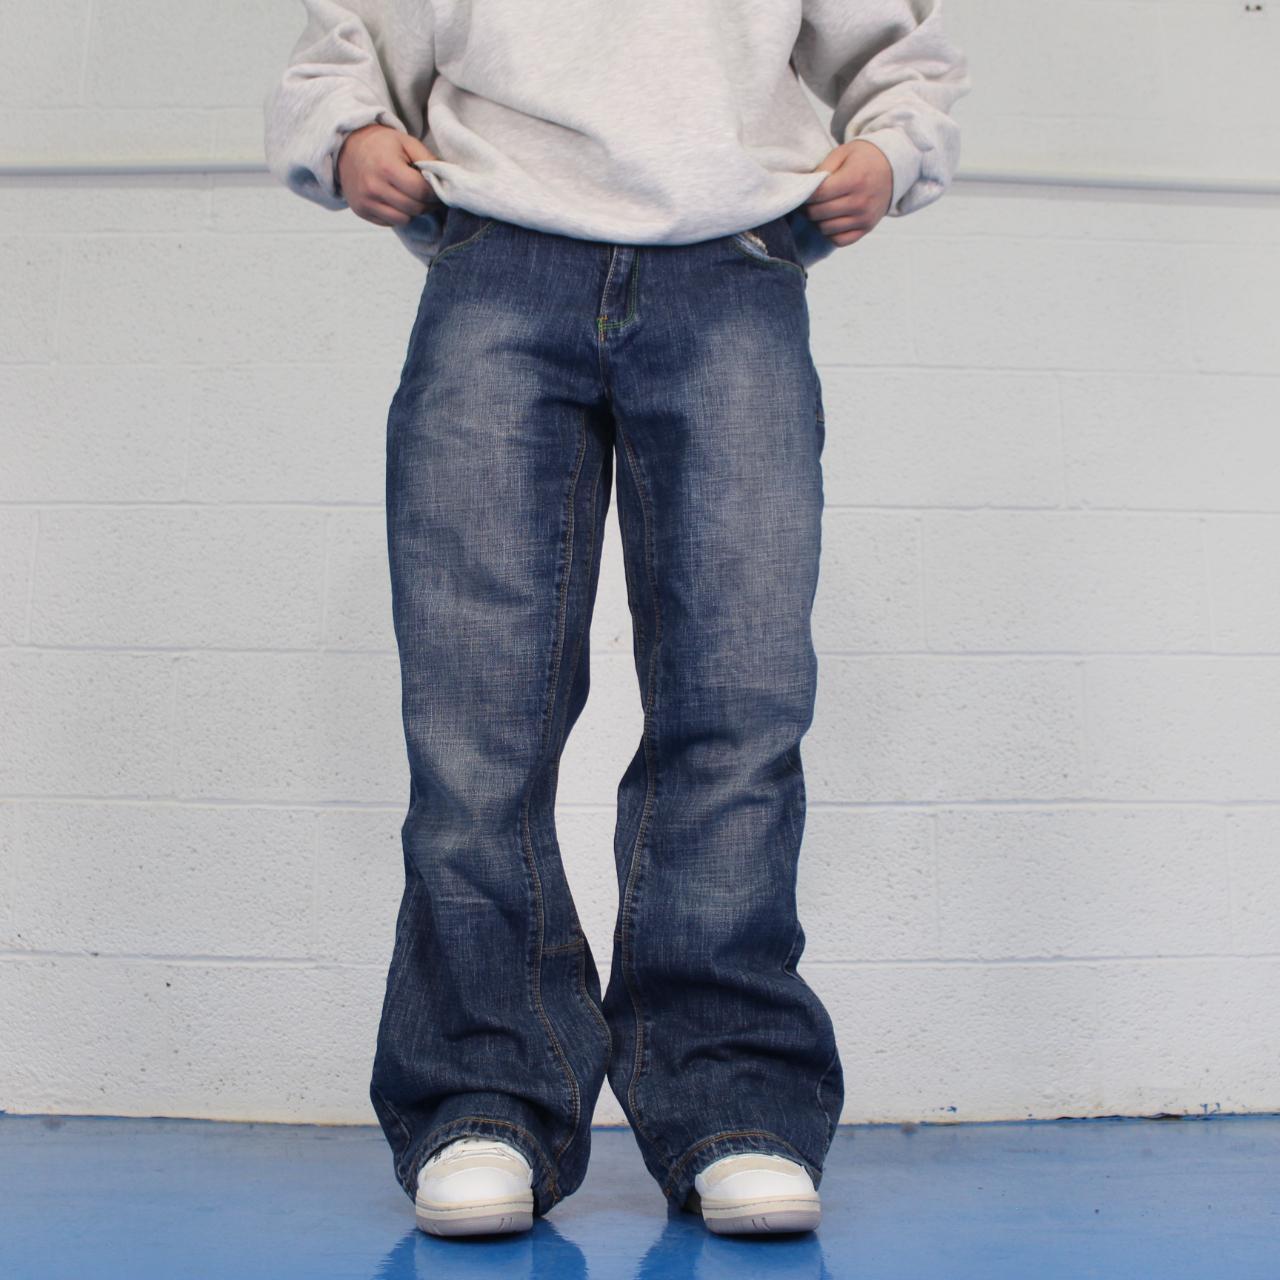 Crest Jeans embroidered flared jeans Loose baggy... - Depop